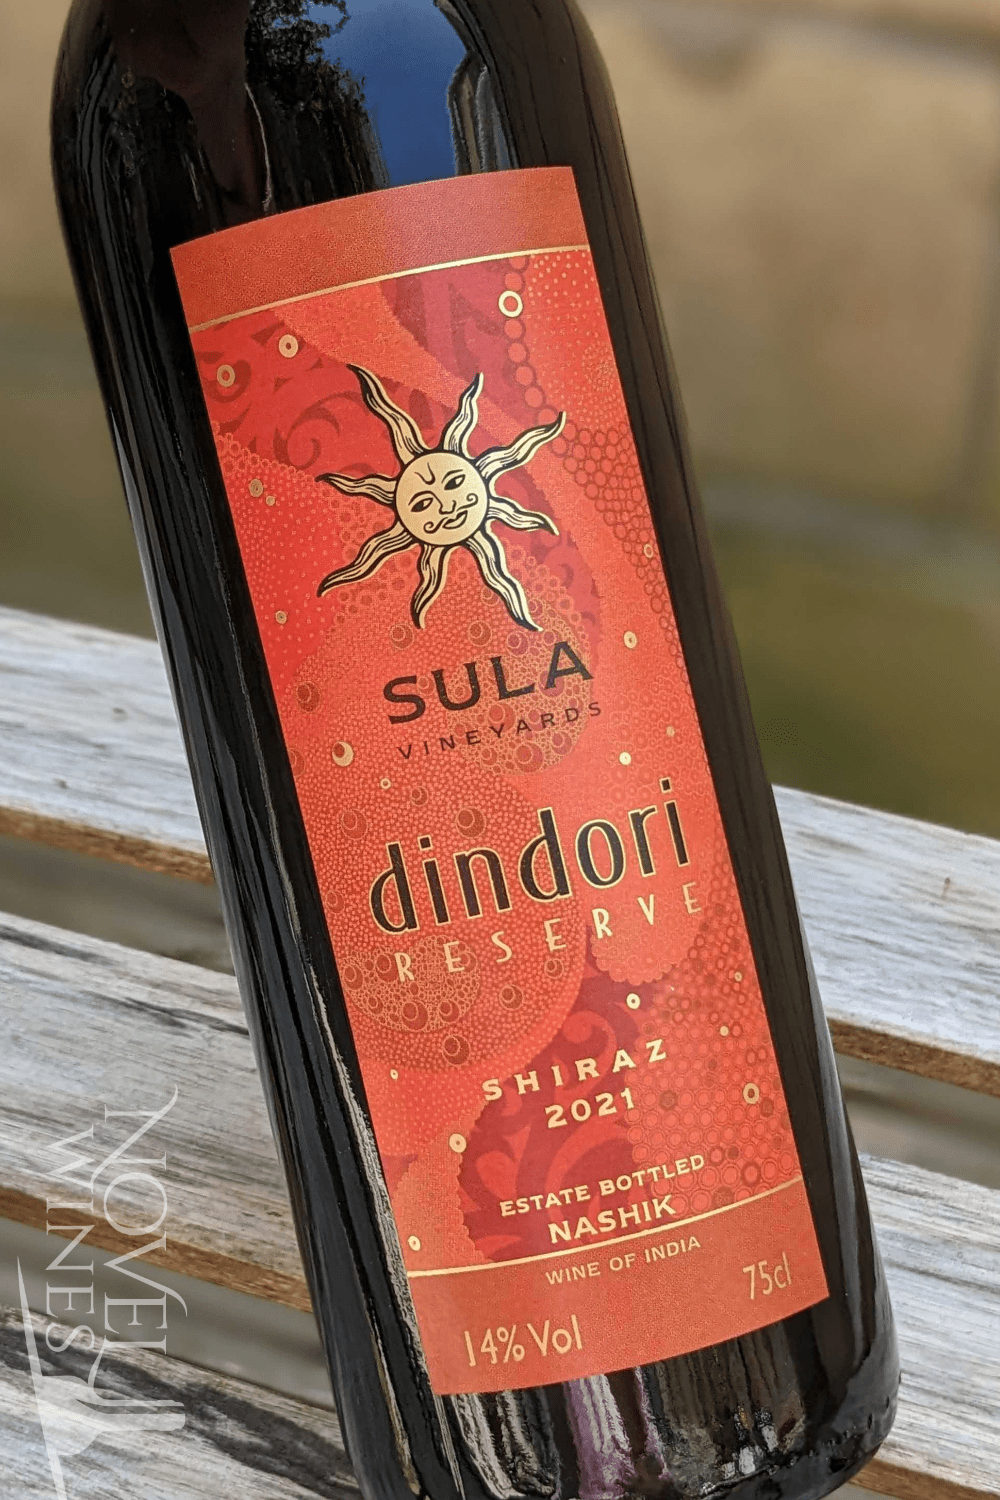 Sula Vineyard Red Wine Sula Vineyards Dindori Reserve Shiraz 2022, India